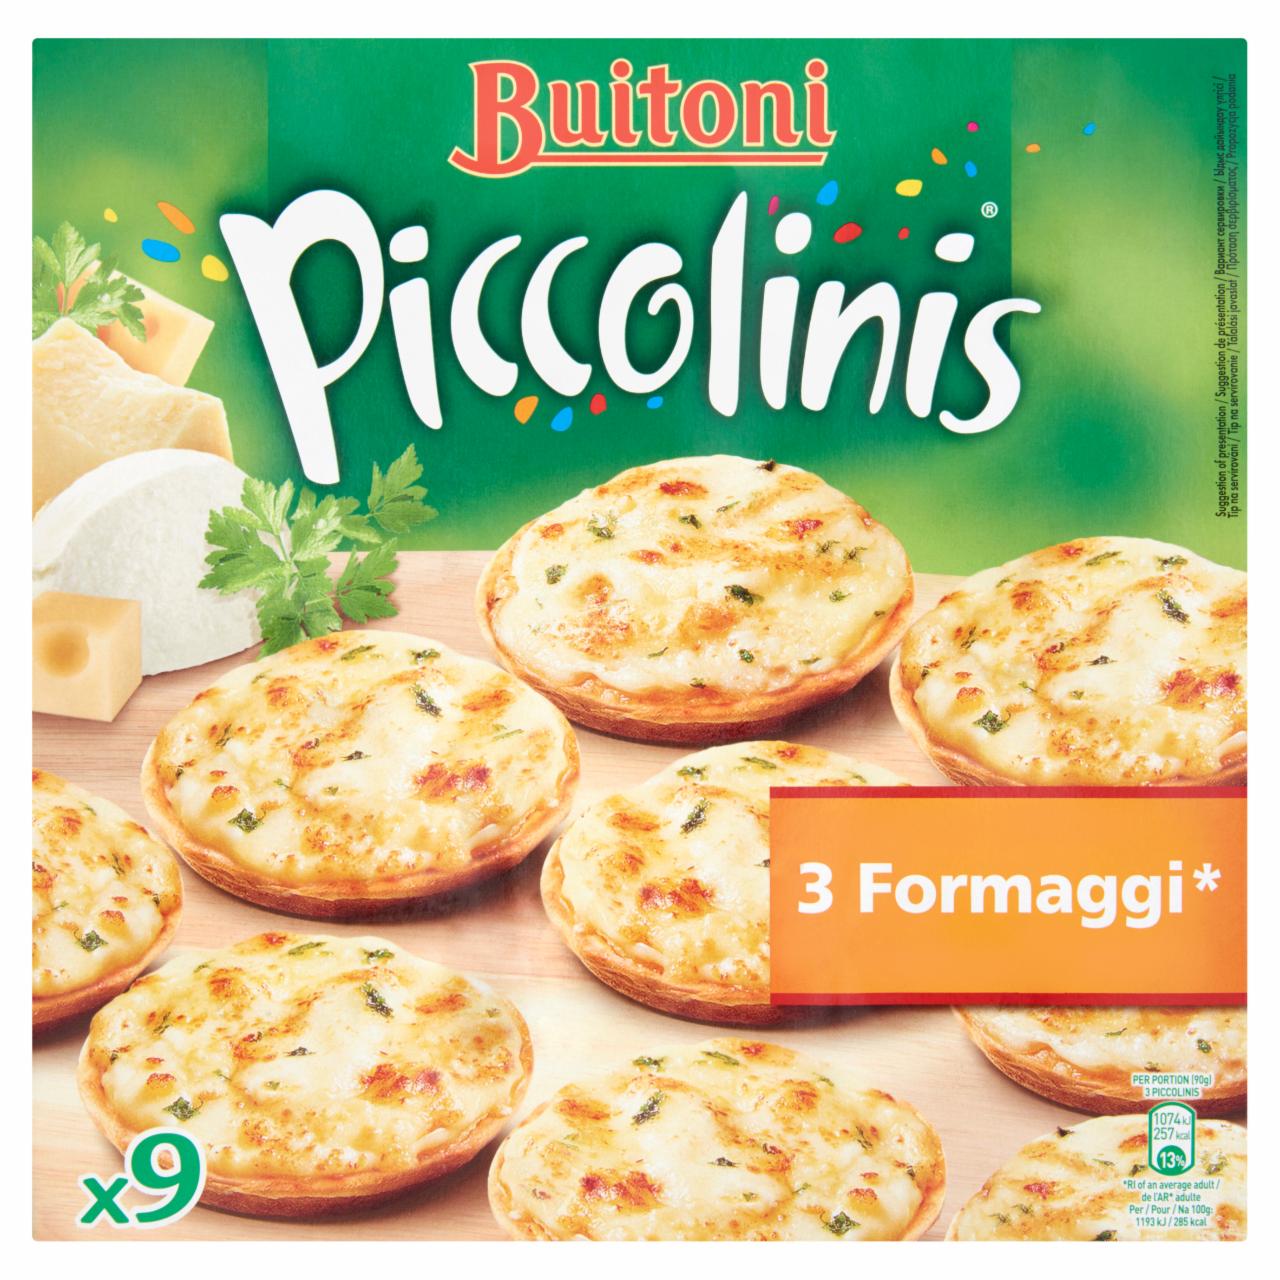 Képek - Buitoni Piccolinis 3 Formaggi gyorsfagyasztott mini pizza 9 db 270 g